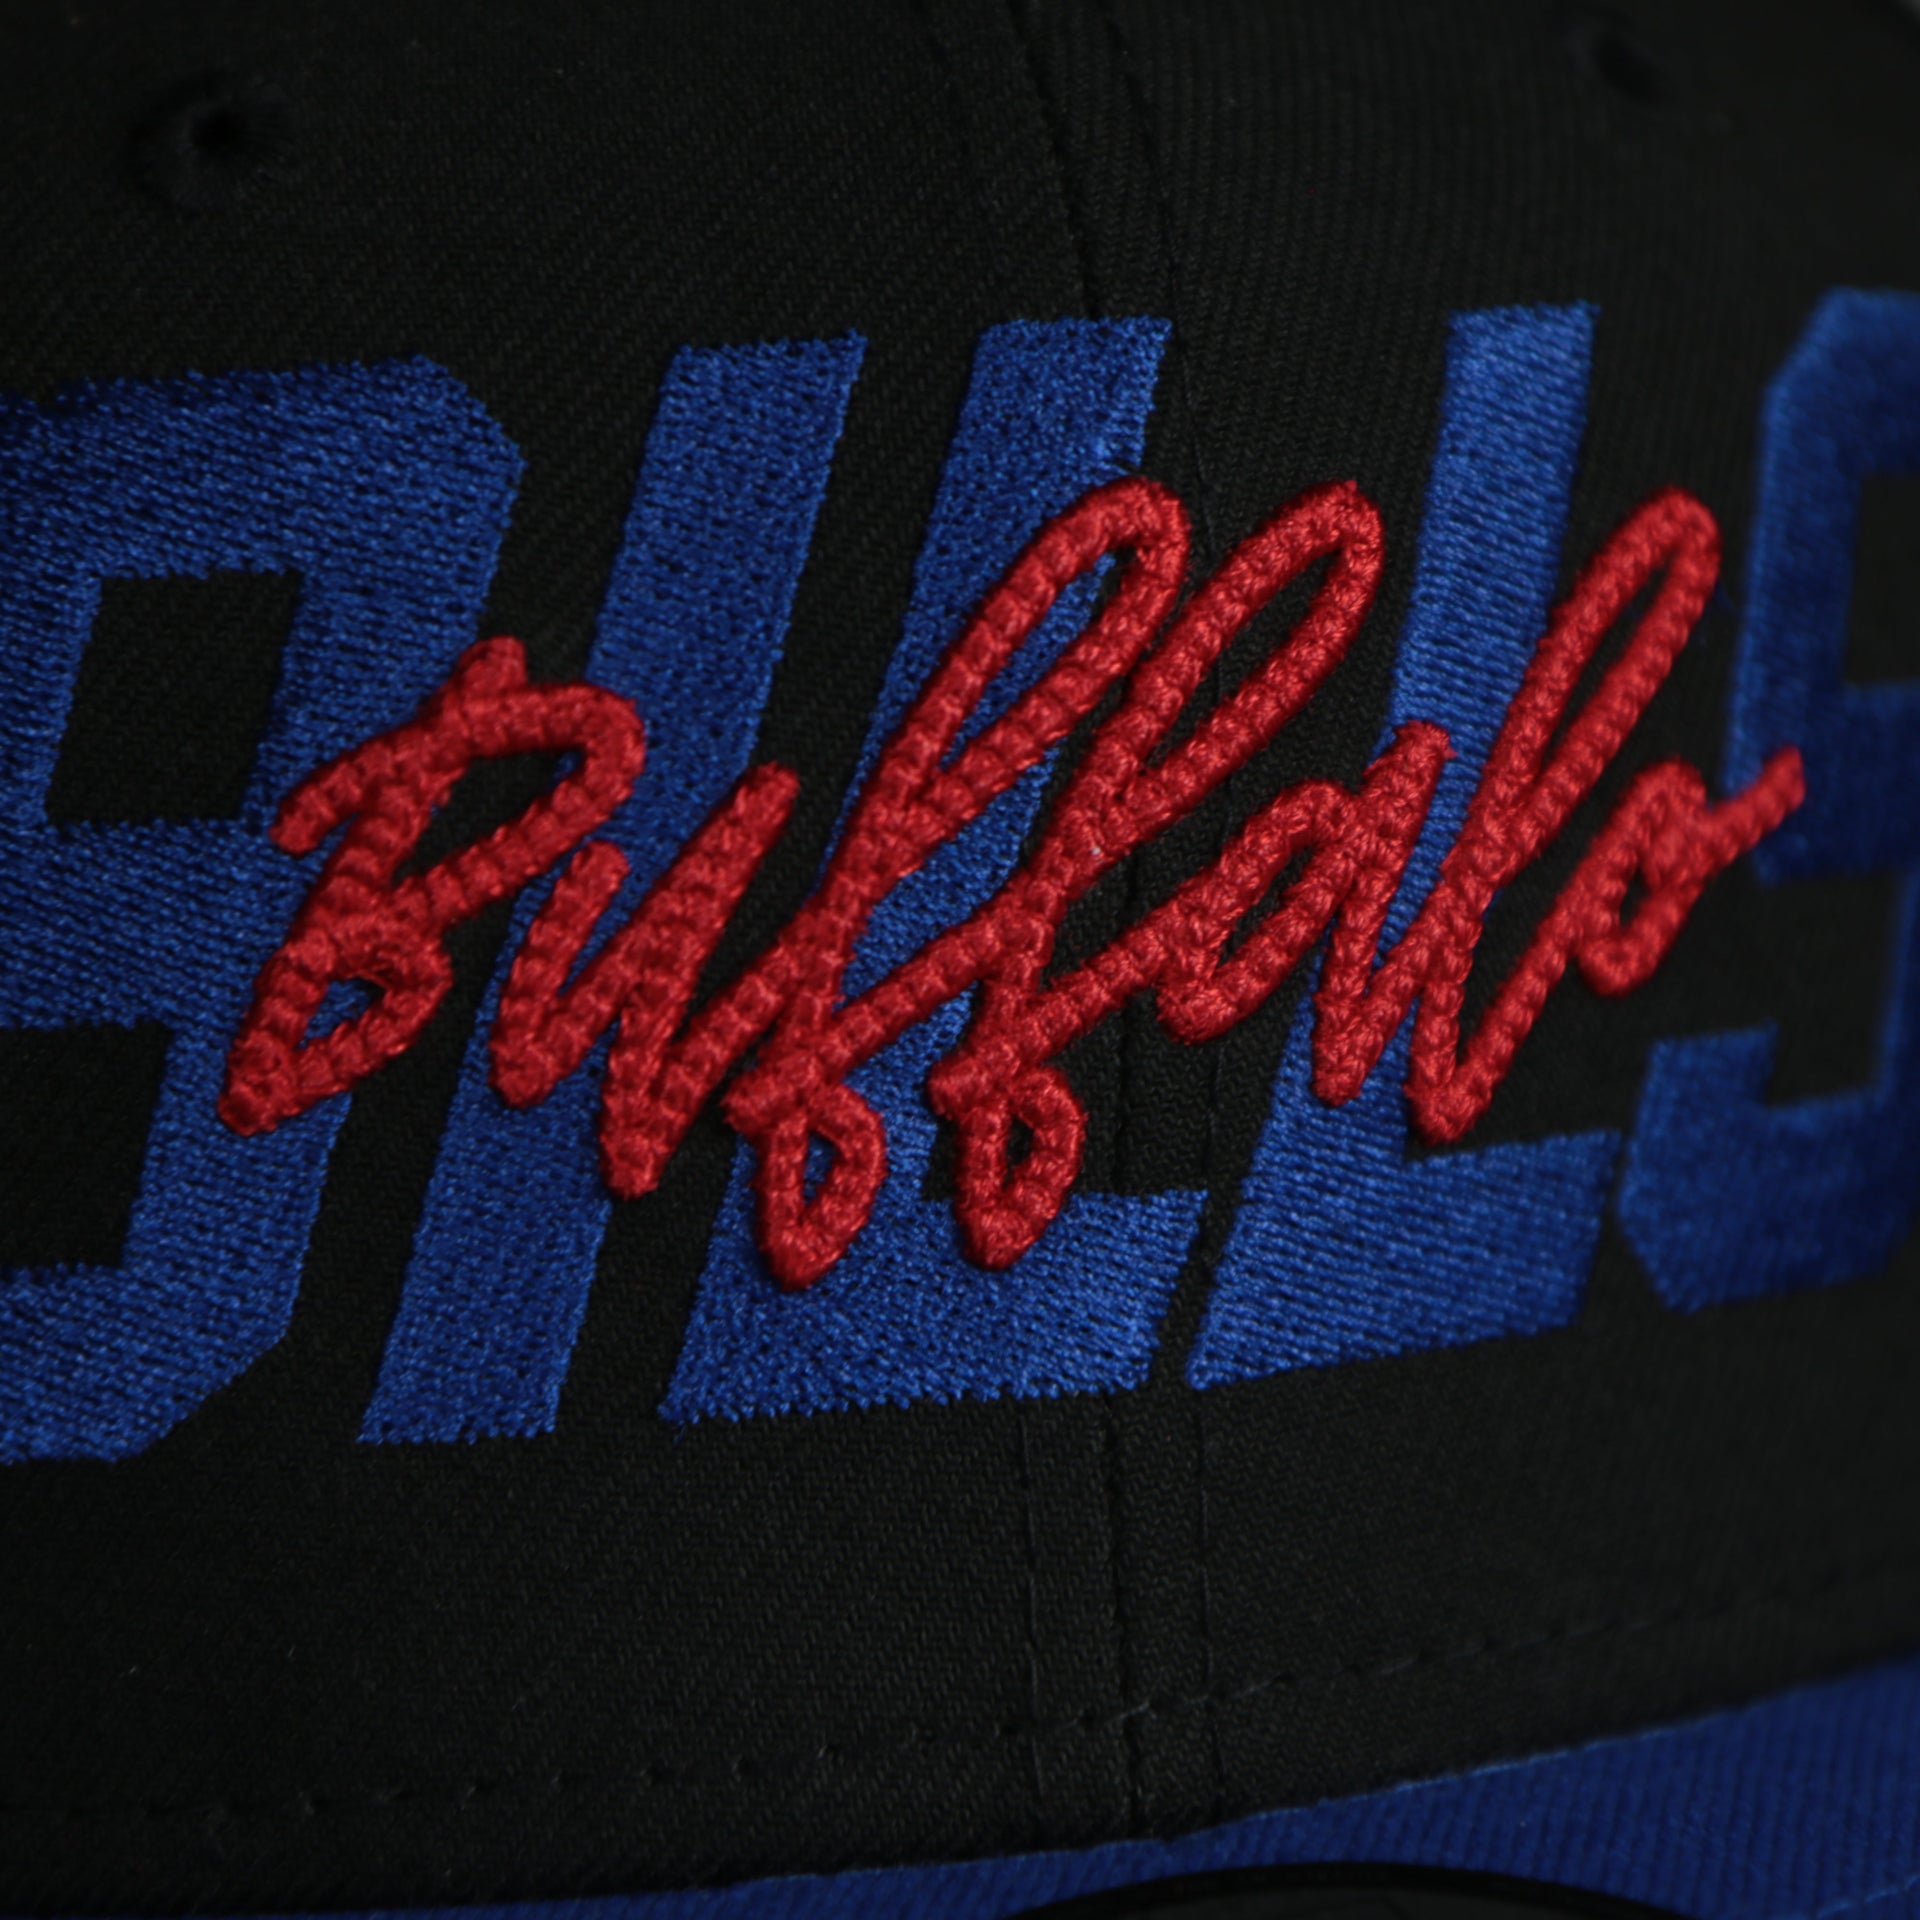 logo shot of the Buffalo Bills 2022 NFL Draft 9Fifty Grey Bottom On-Field Snapback | Black